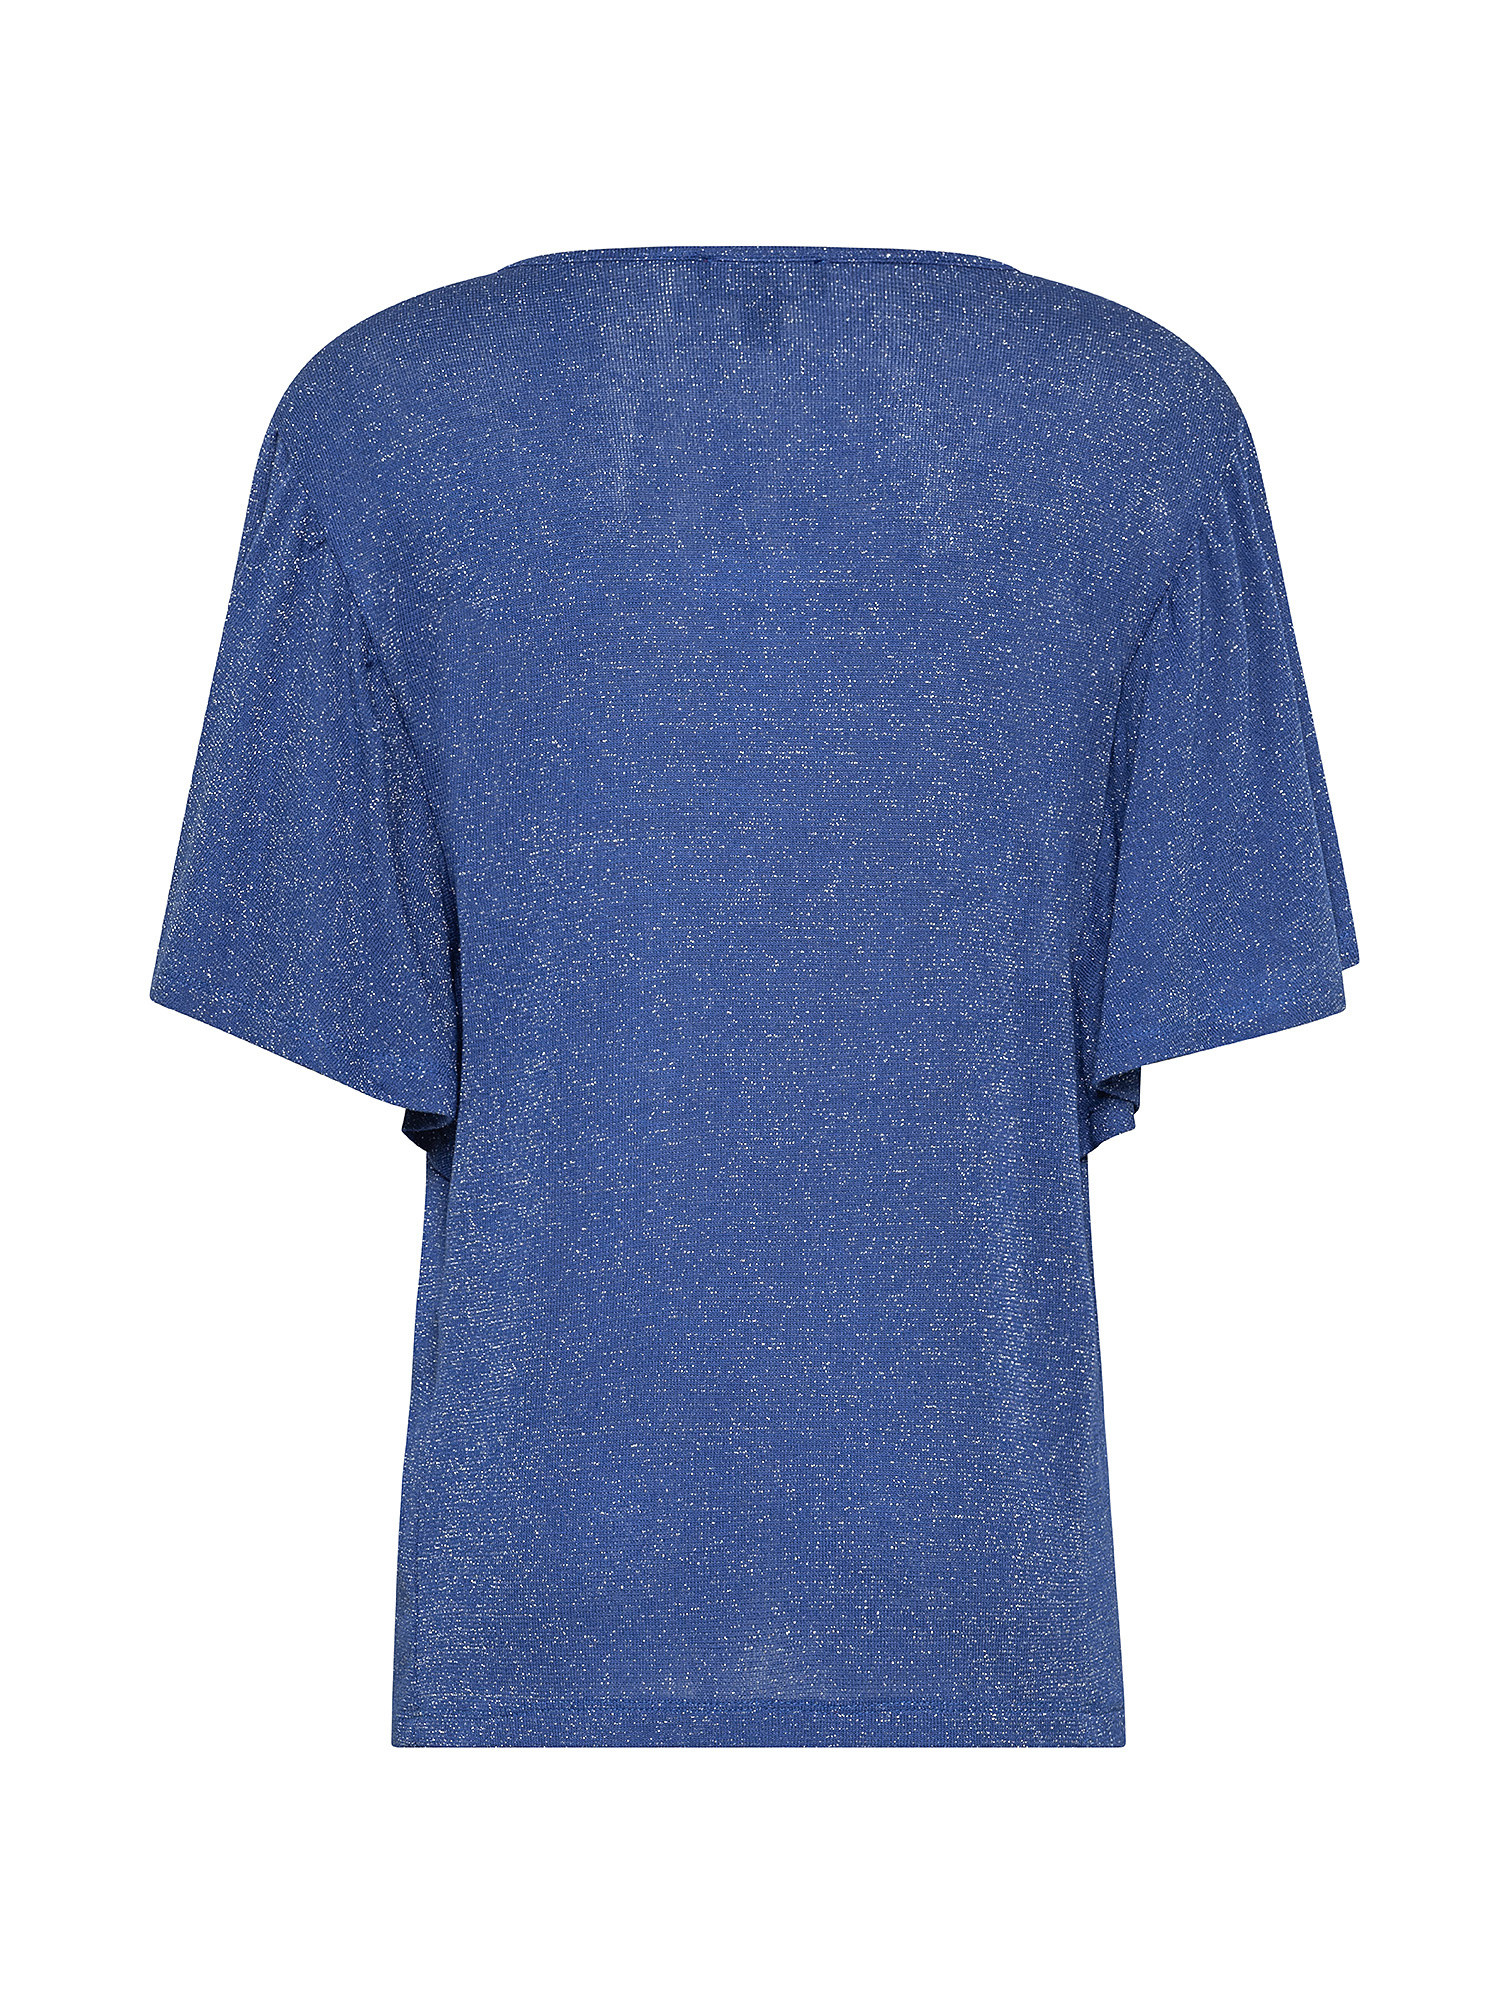 Bat sleeve T-shirt, Royal Blue, large image number 1